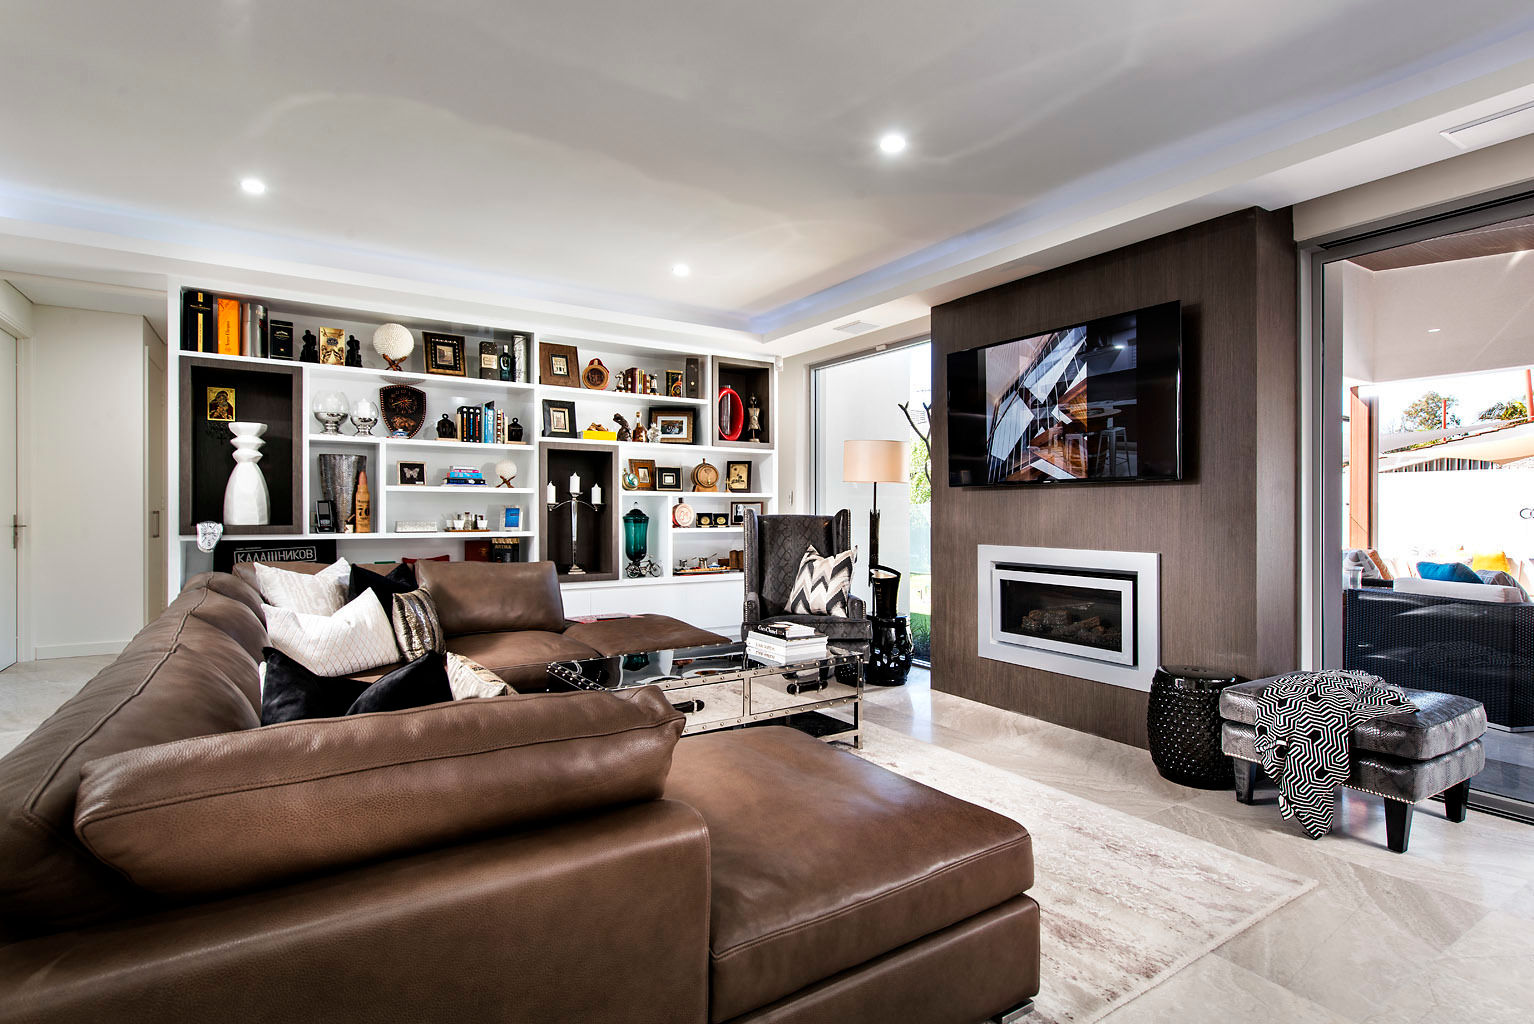 Living Rooms by Moda Interiors, Perth, Western Australia Moda Interiors Гостиные в эклектичном стиле